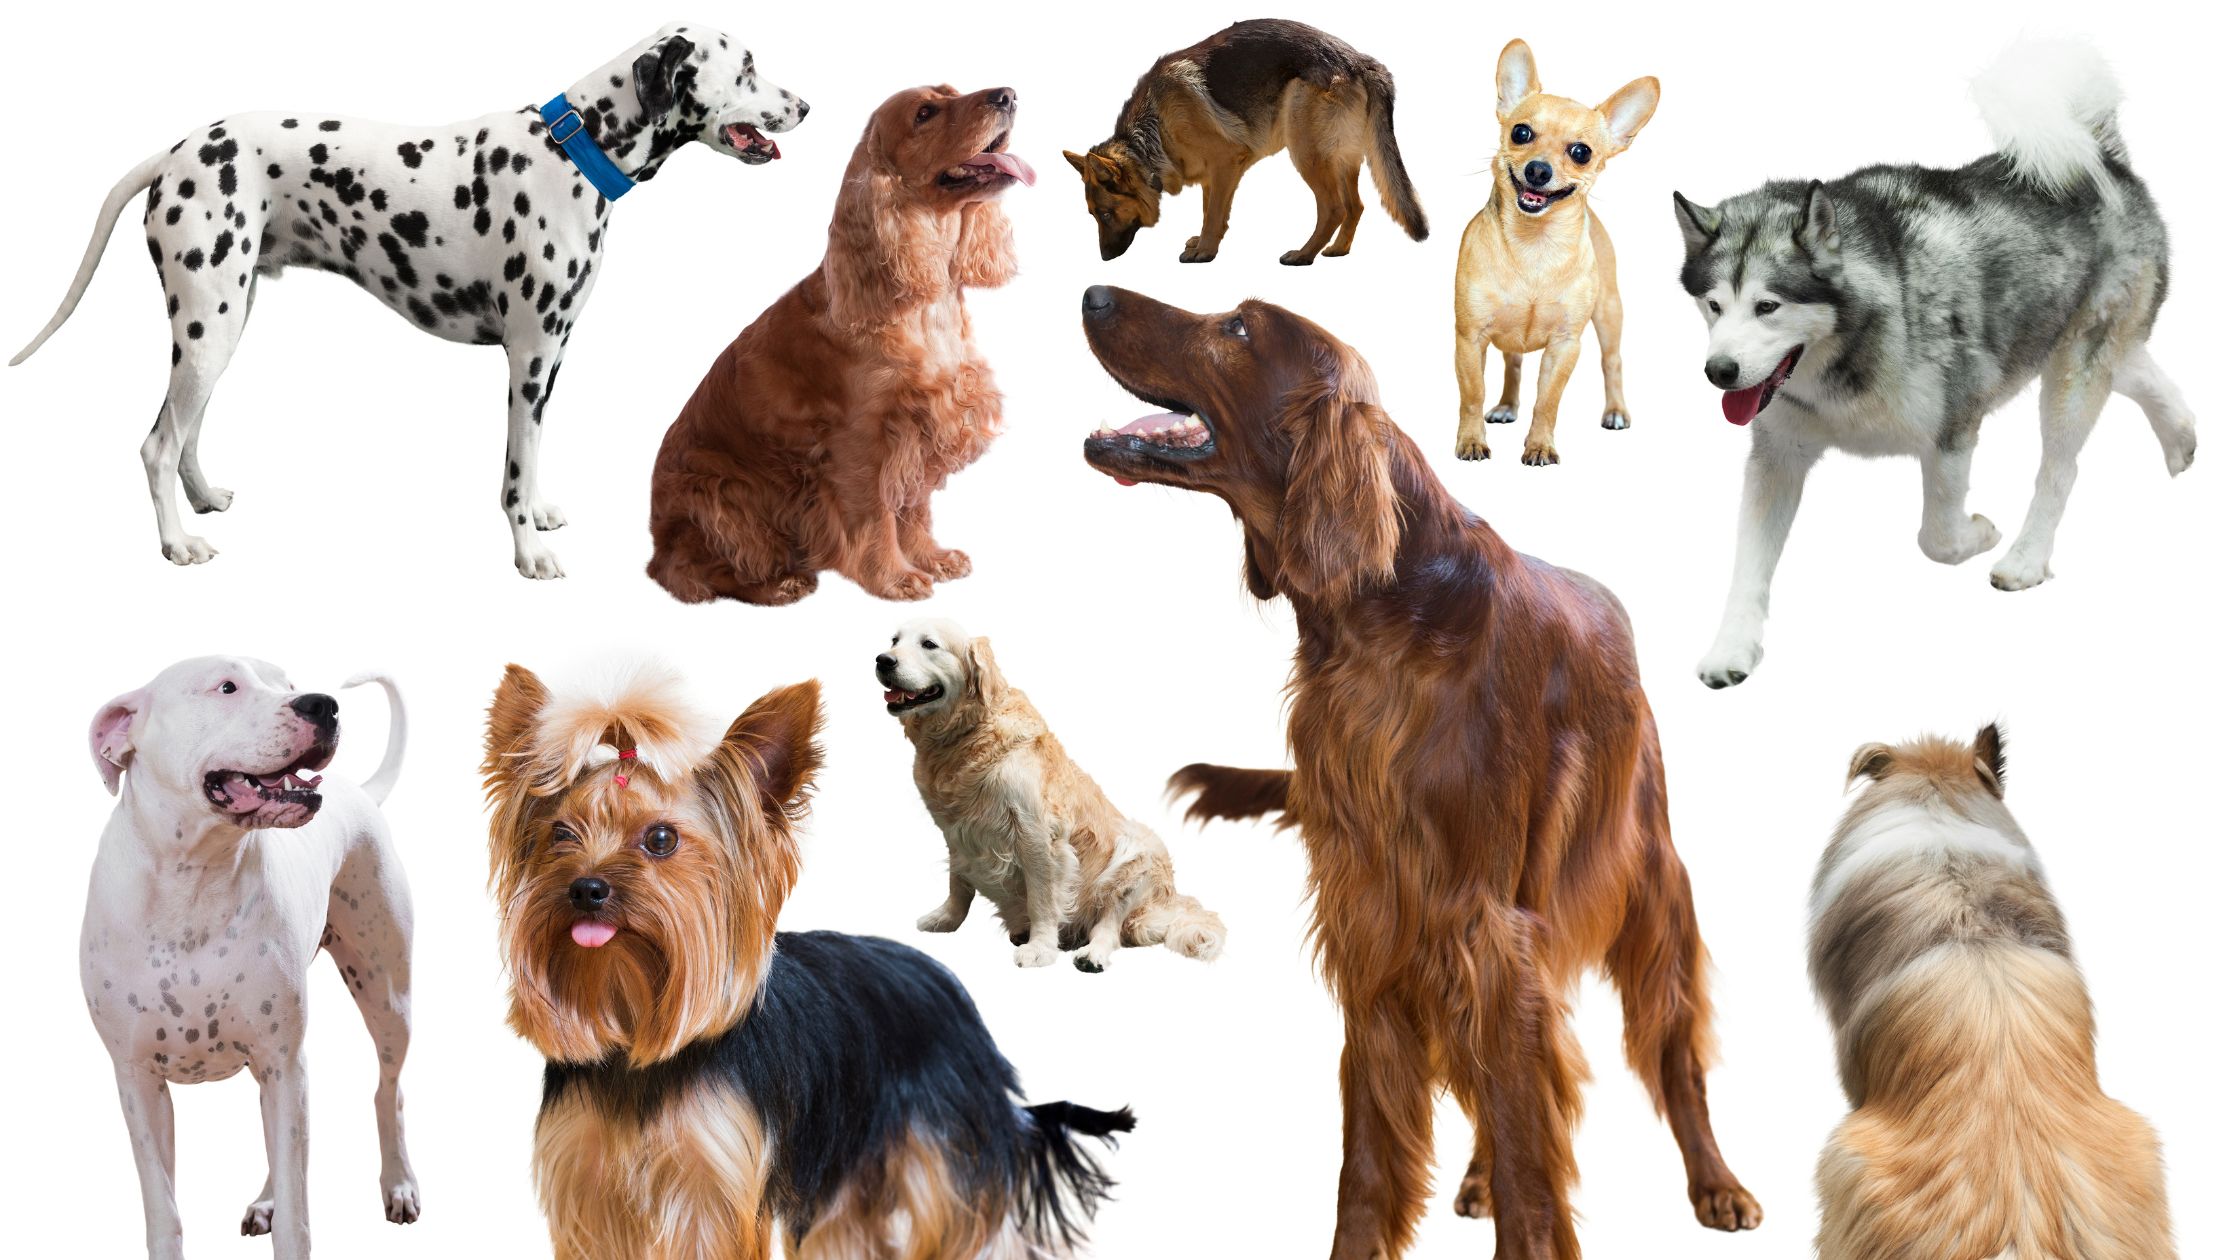 10 groups of dog breeds